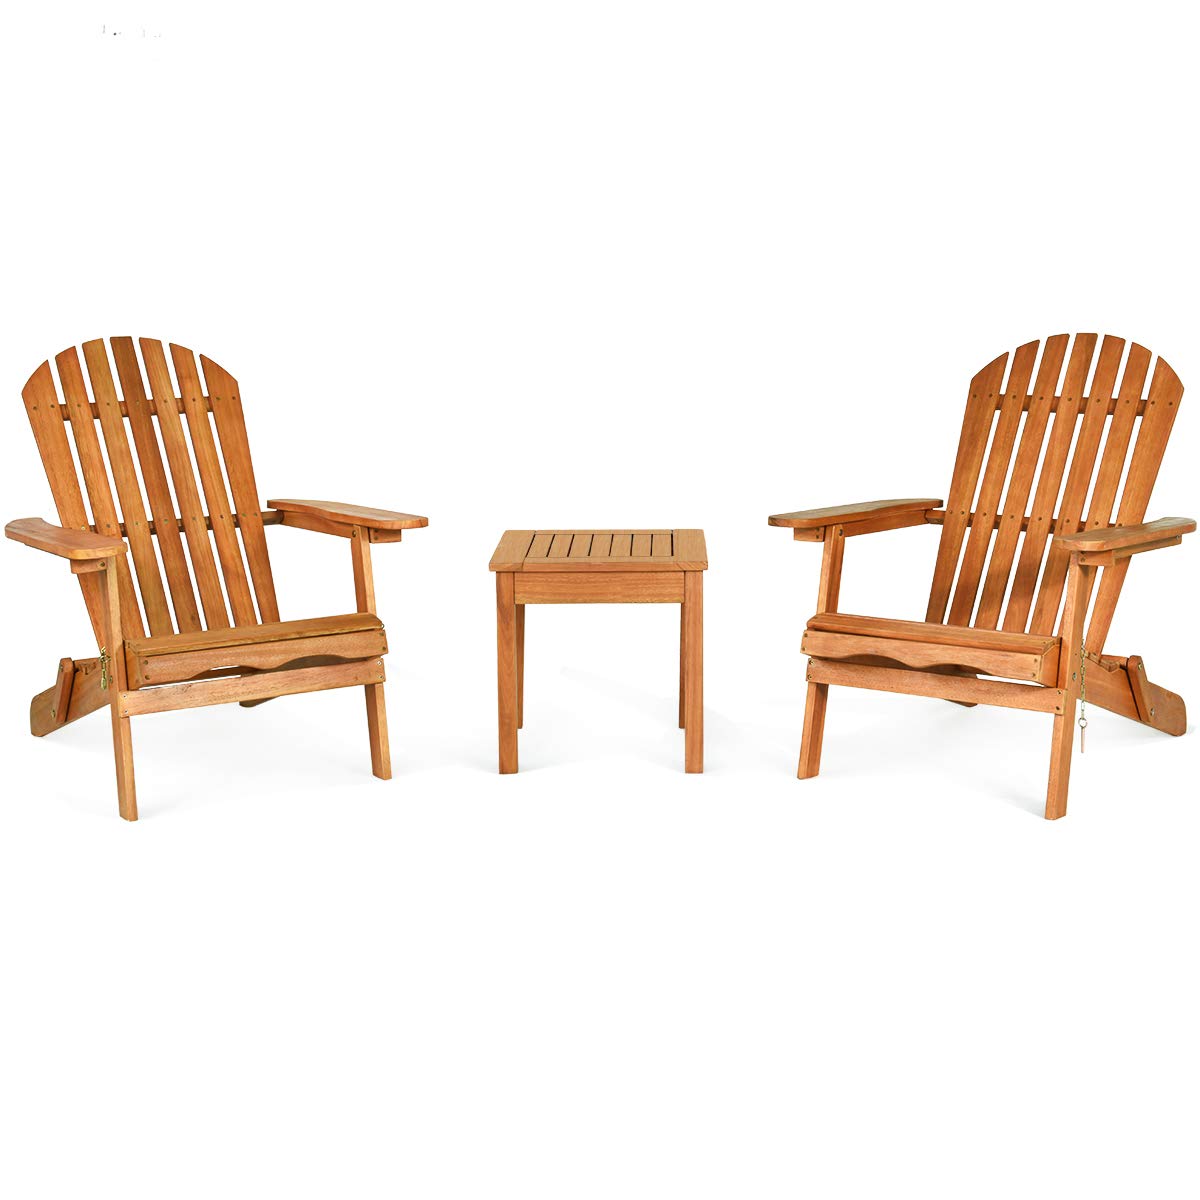 Giantex Adirondack Chair Set 3-Piece Foldable Wooden Chairs Set